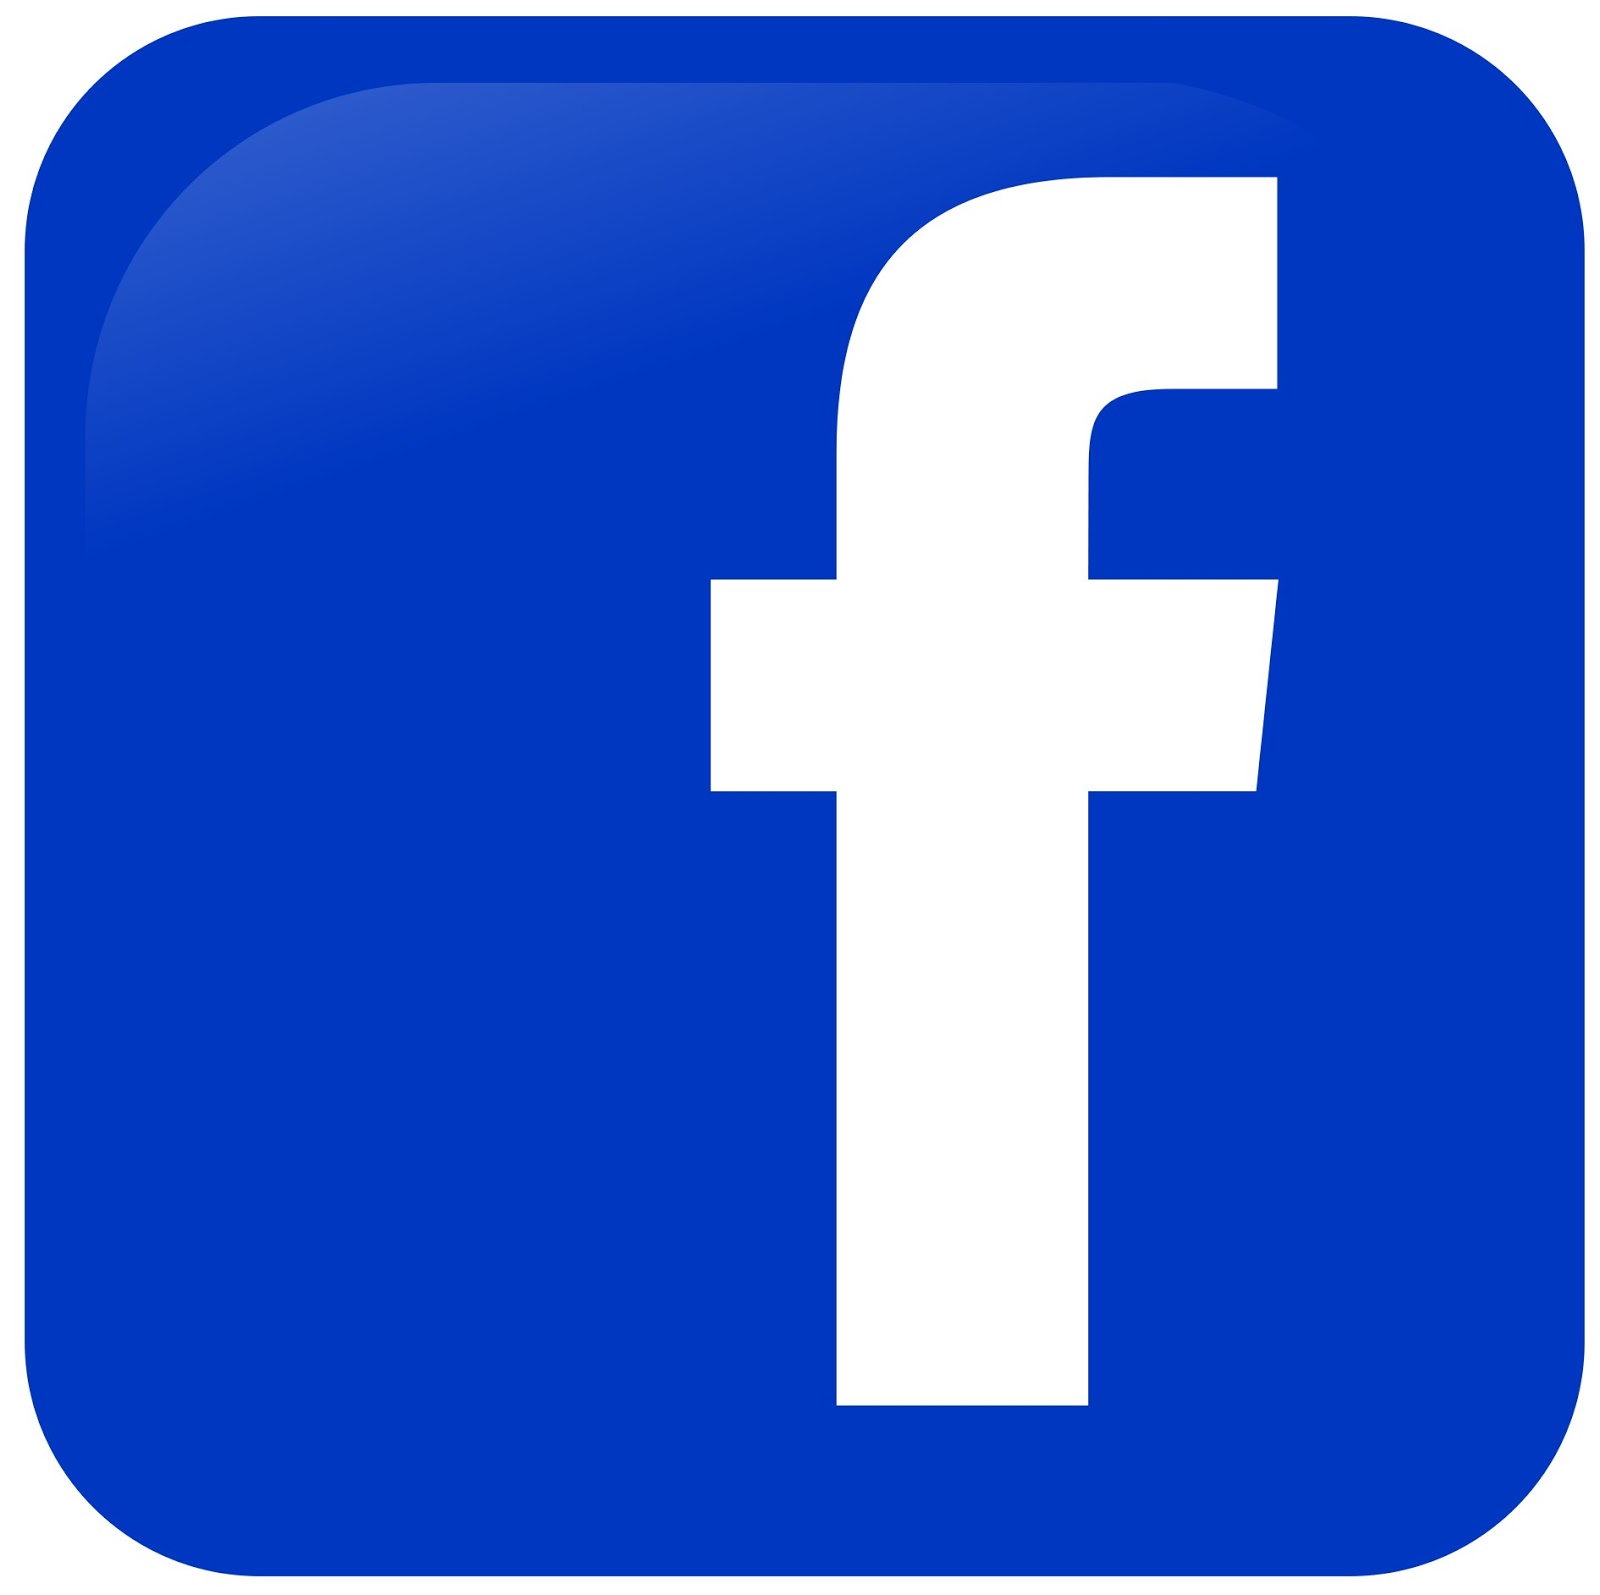 Dezignation Facebook Vector Icons Free